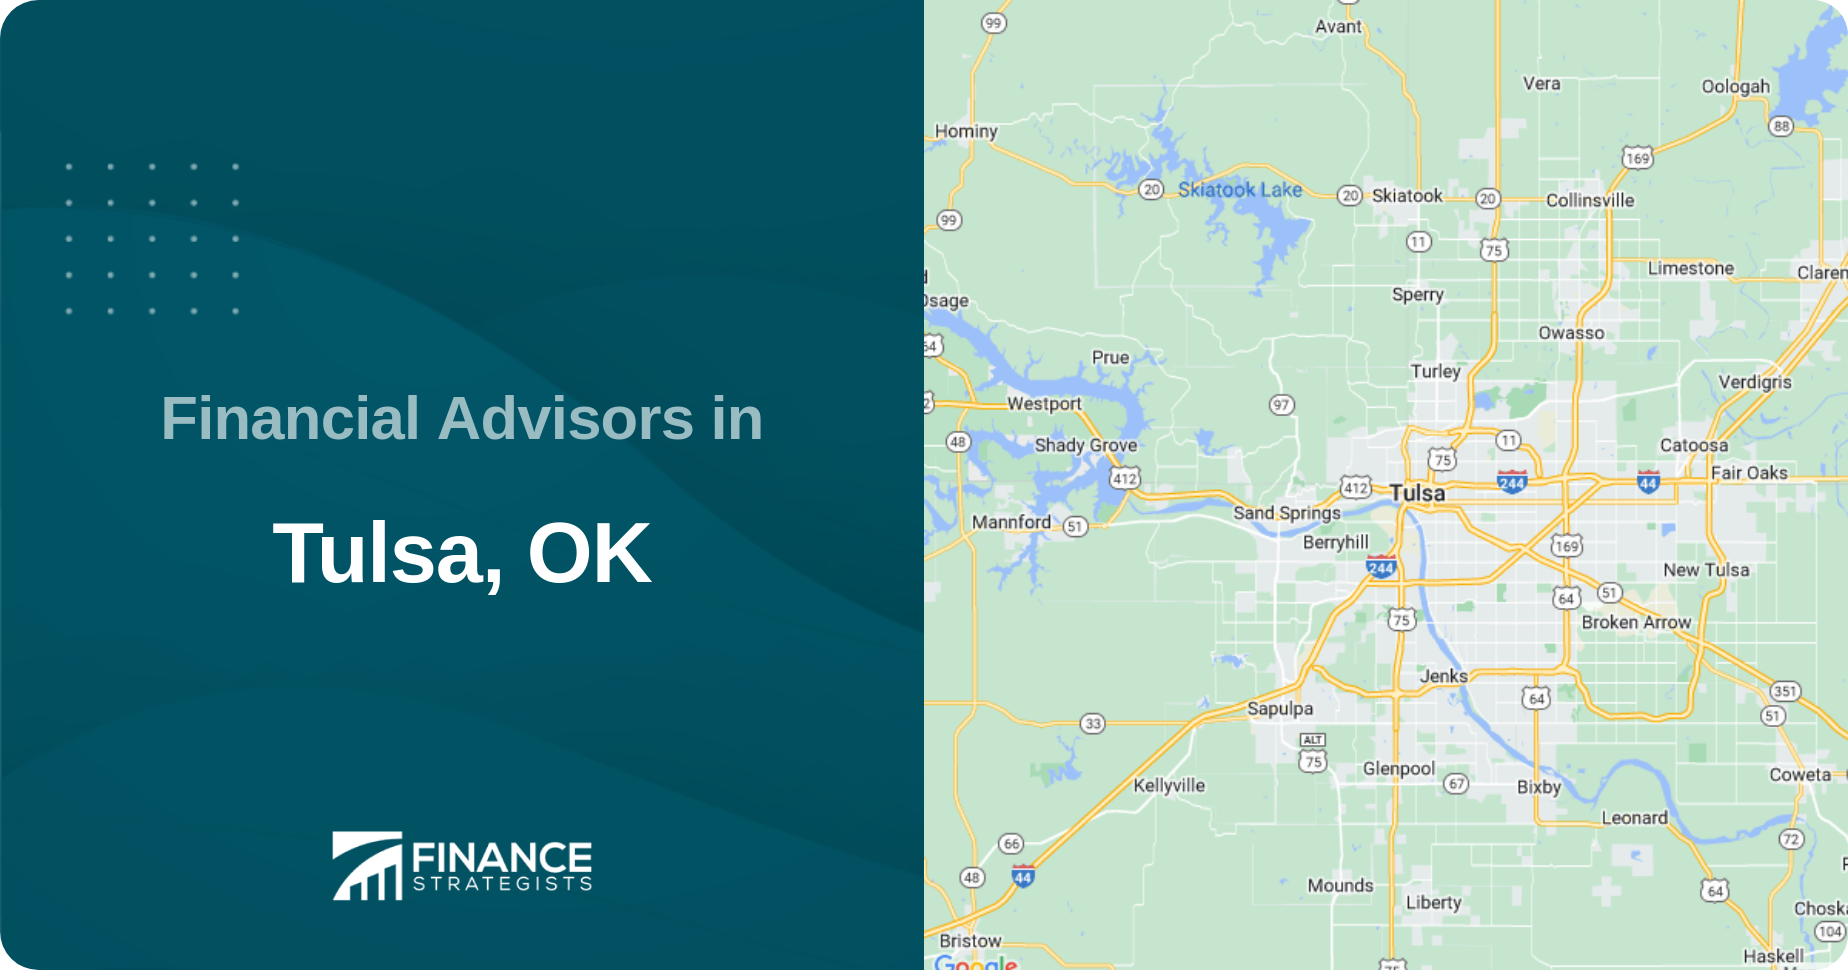 Financial Advisors in Tulsa, OK